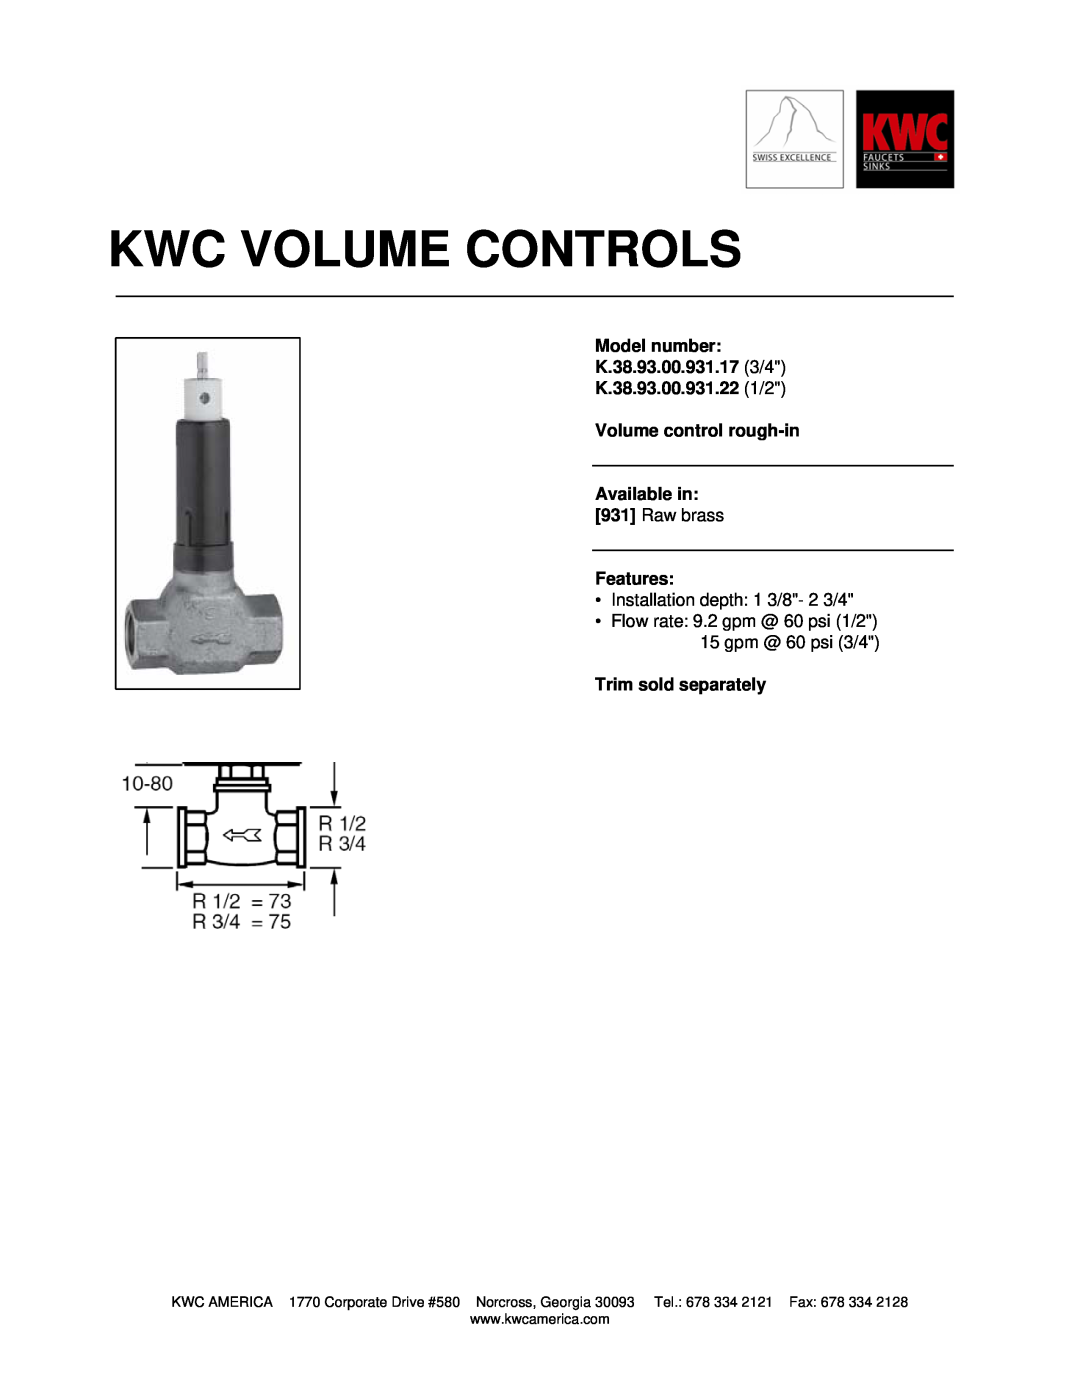 KWC manual Kwc Volume Controls, Model number K.38.93.00.931.17 3/4, K.38.93.00.931.22 1/2 Volume control rough-in 